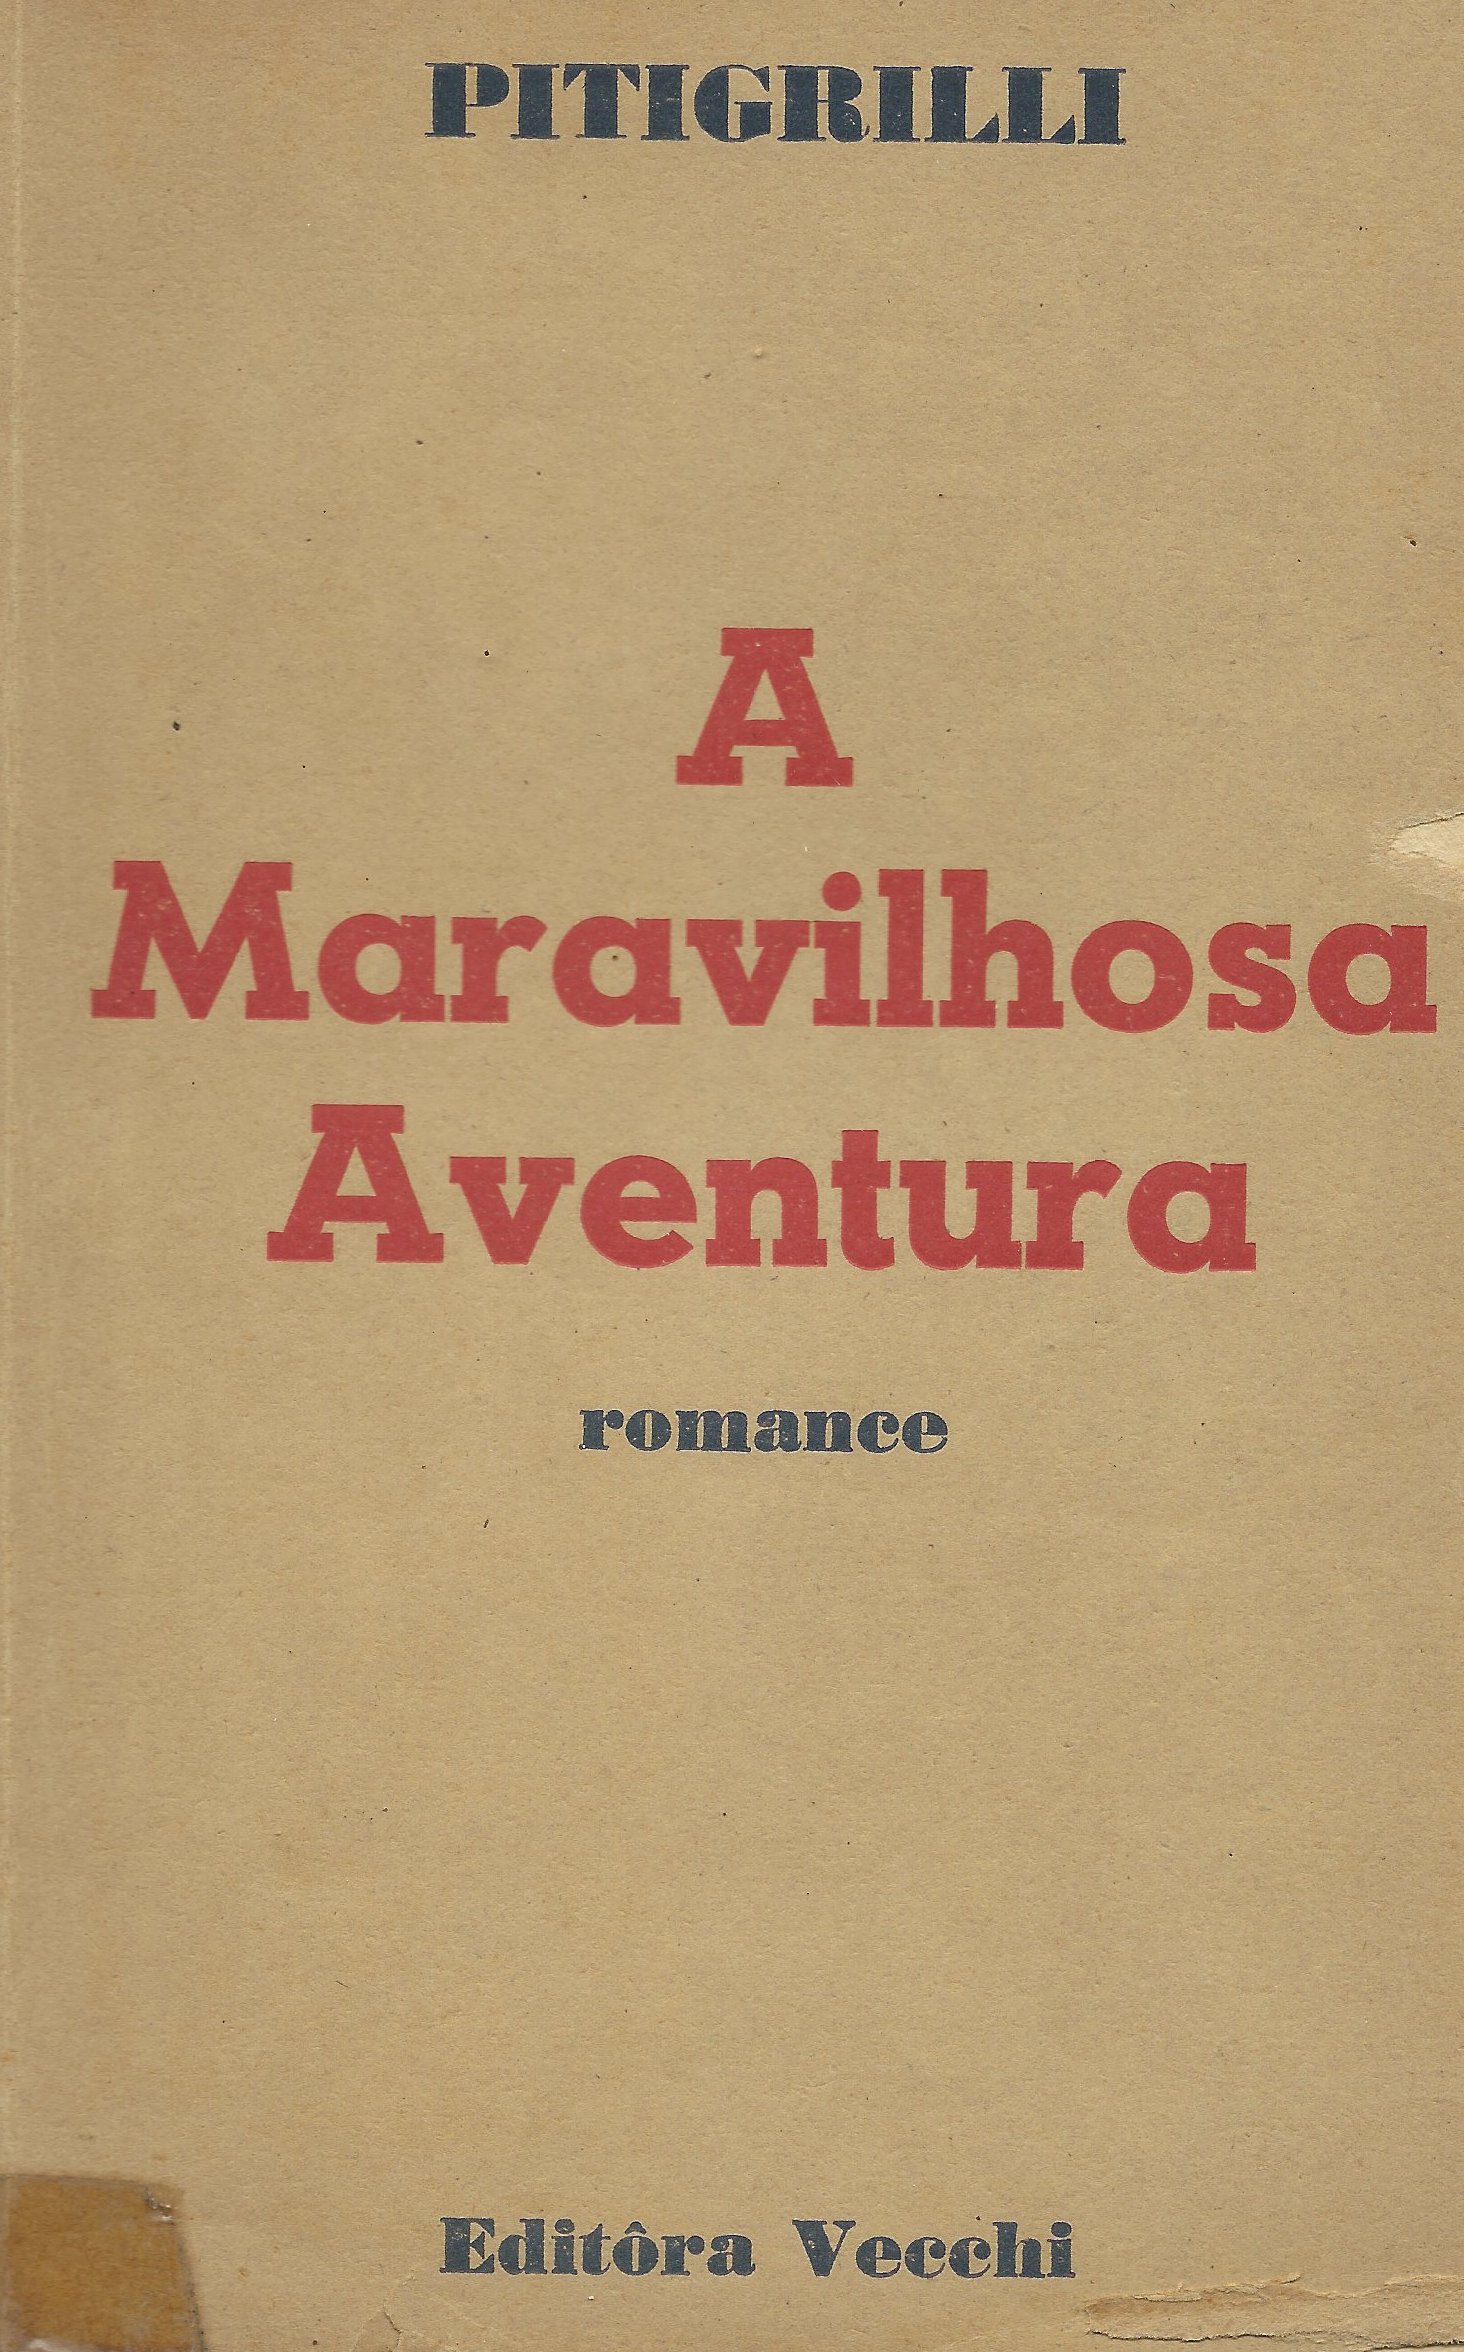 https://www.literaturabrasileira.ufsc.br/_images/obras/a_maravilhosa_aventura_ok.jpg